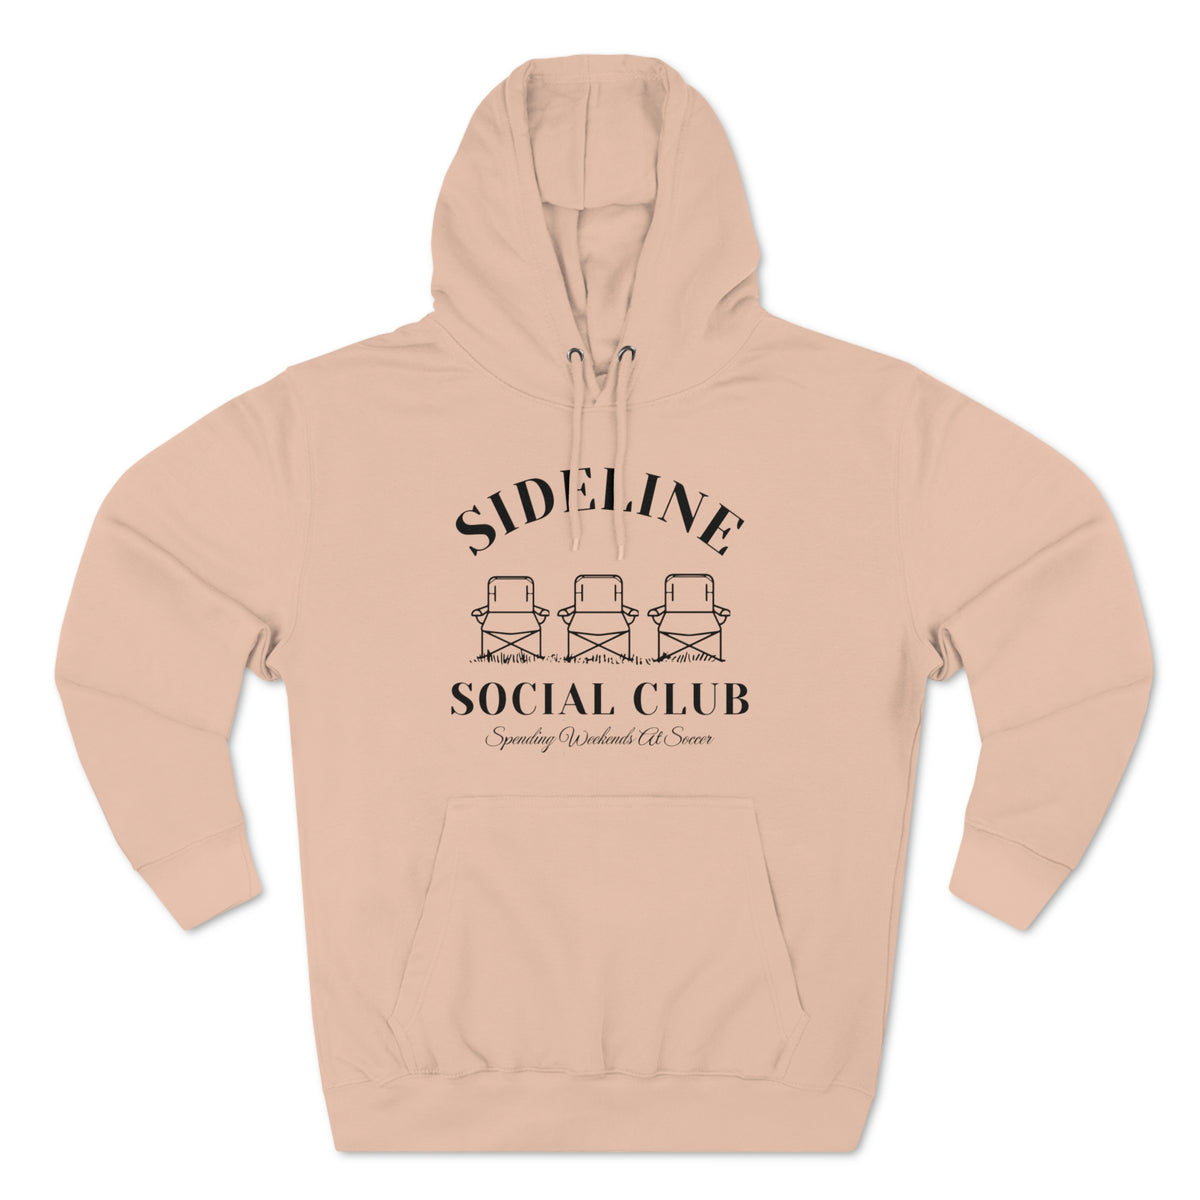 Sideline Social Club Adult Hooded Sweatshirt